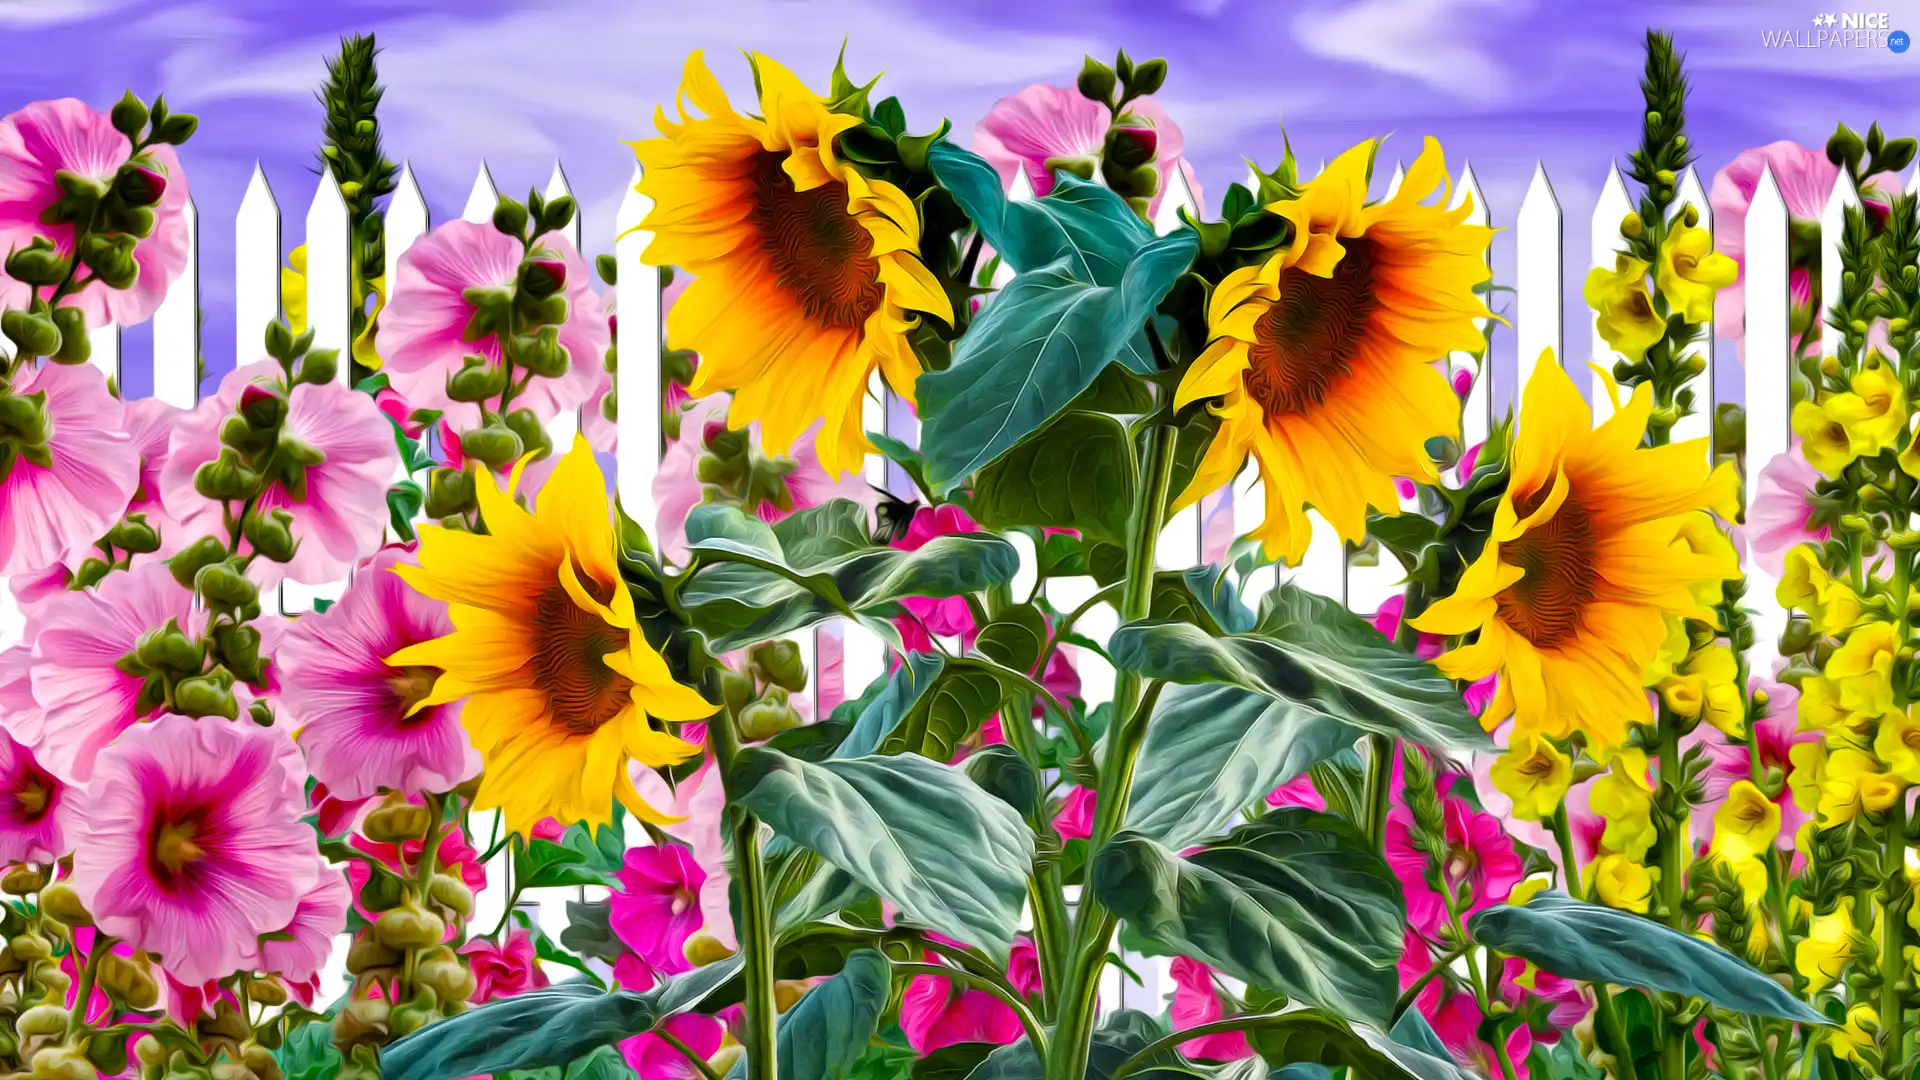 Flowers, Nice sunflowers, graphics, Hollyhocks